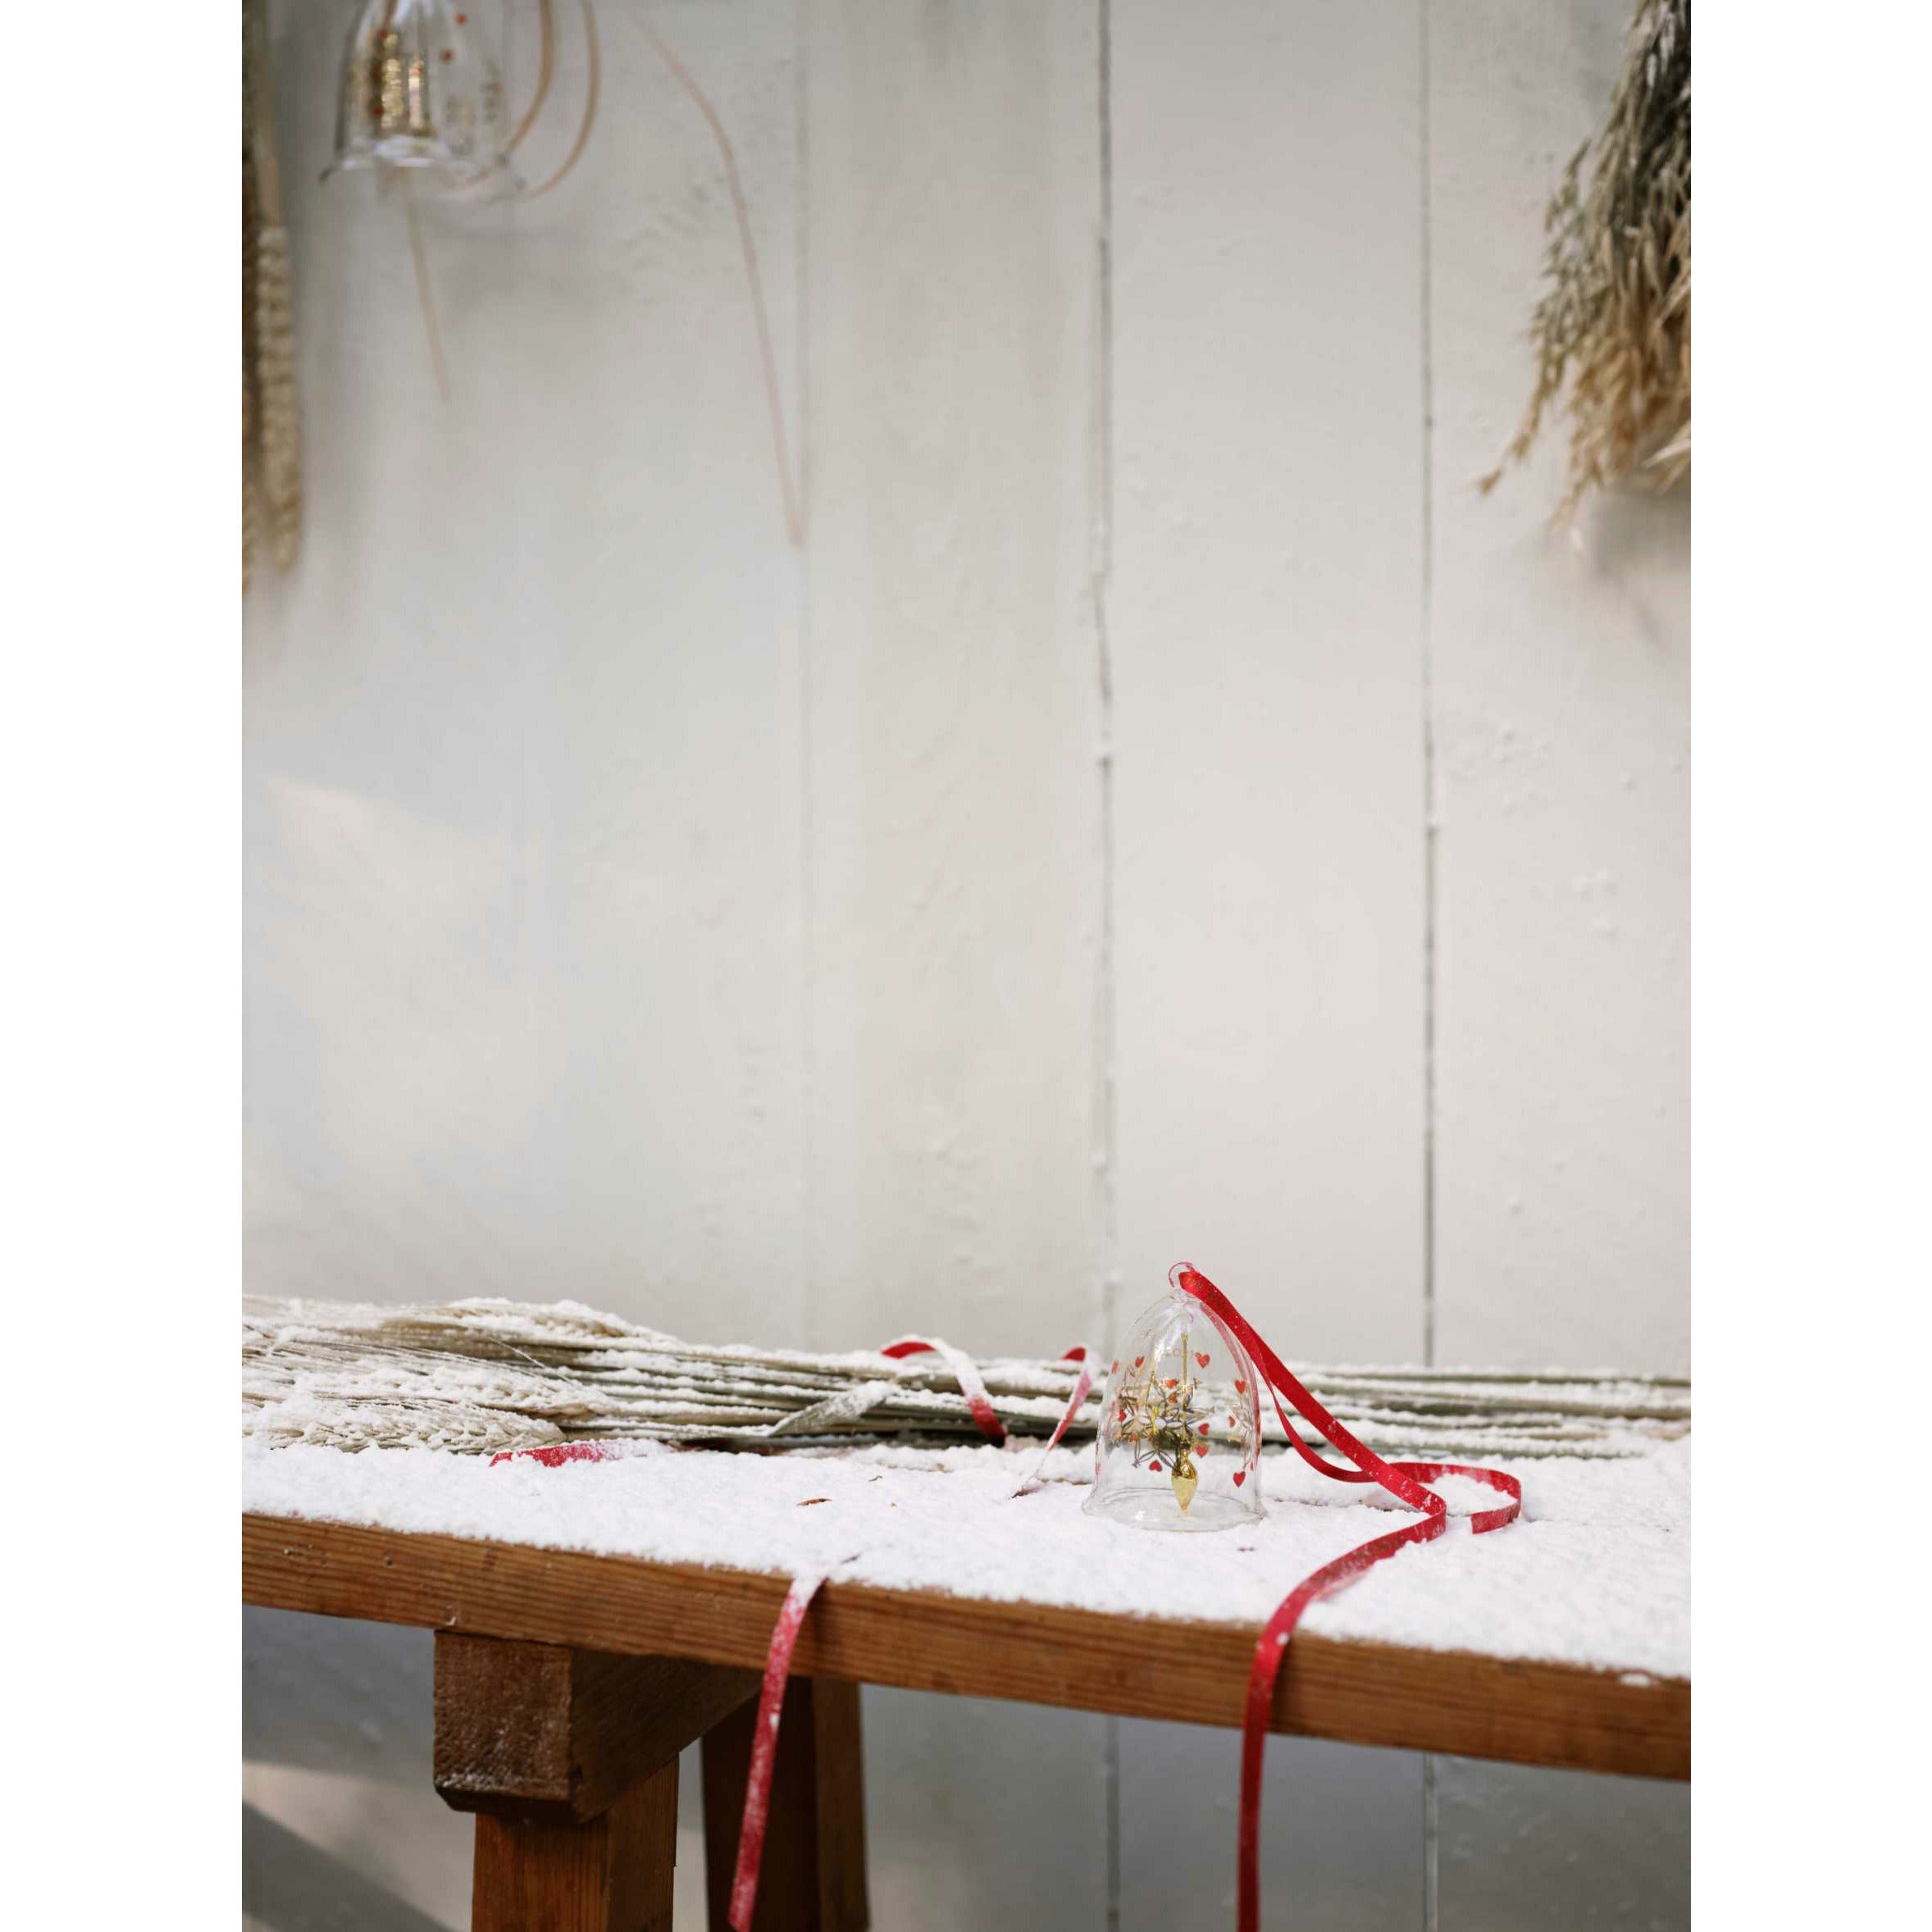 Holmegaard Ann Sofi Romme Christmas Bell, groot